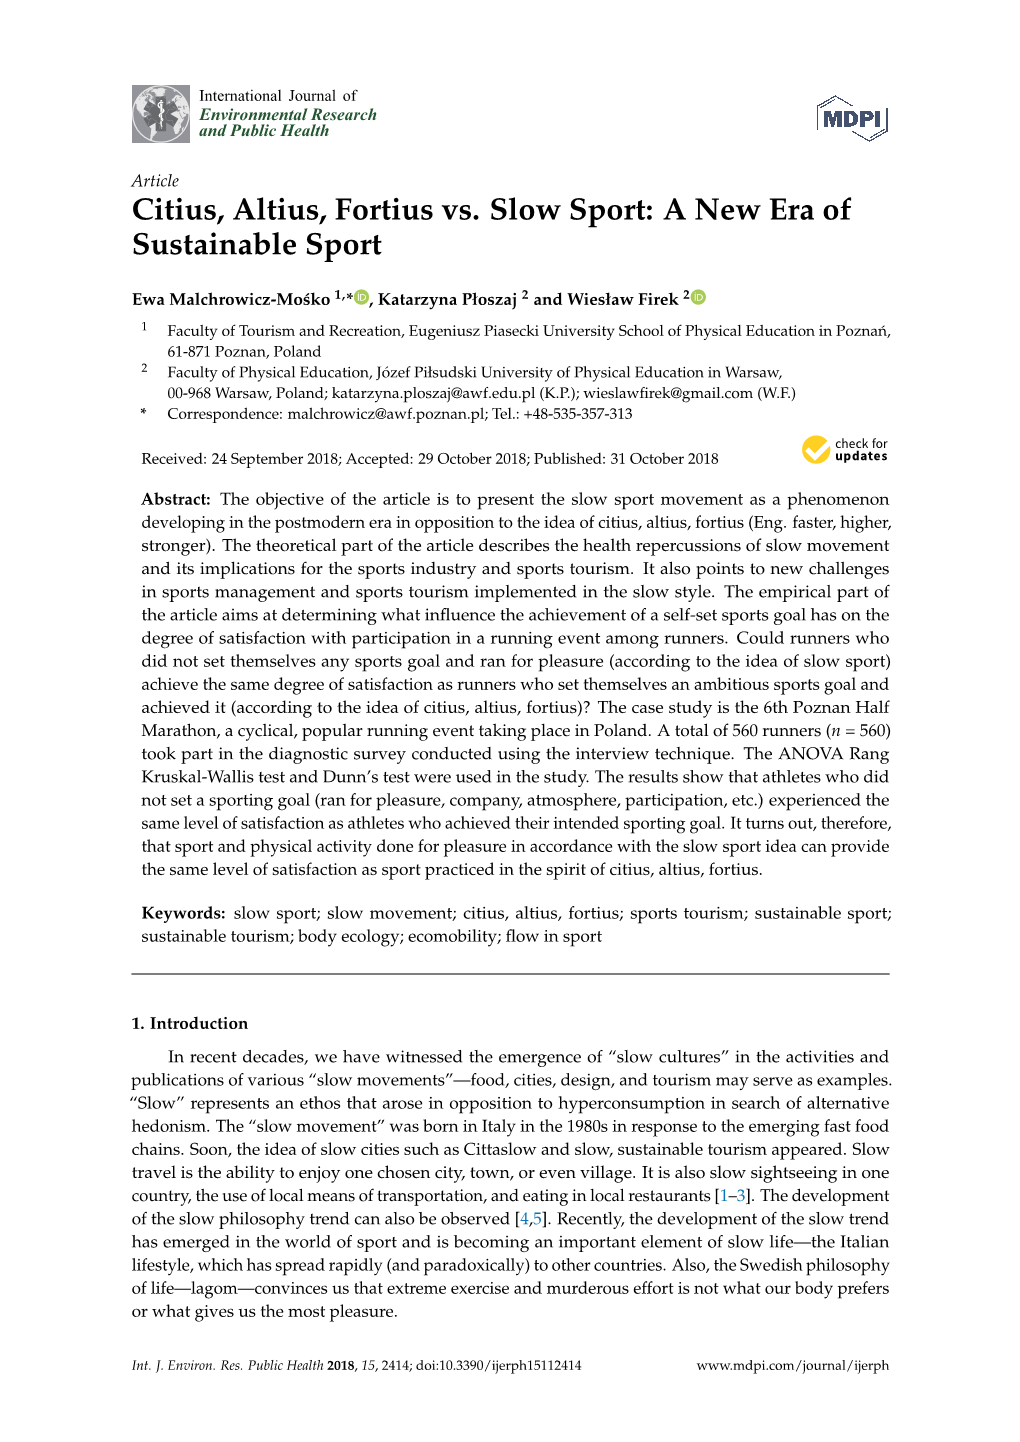 Citius, Altius, Fortius Vs. Slow Sport: a New Era of Sustainable Sport